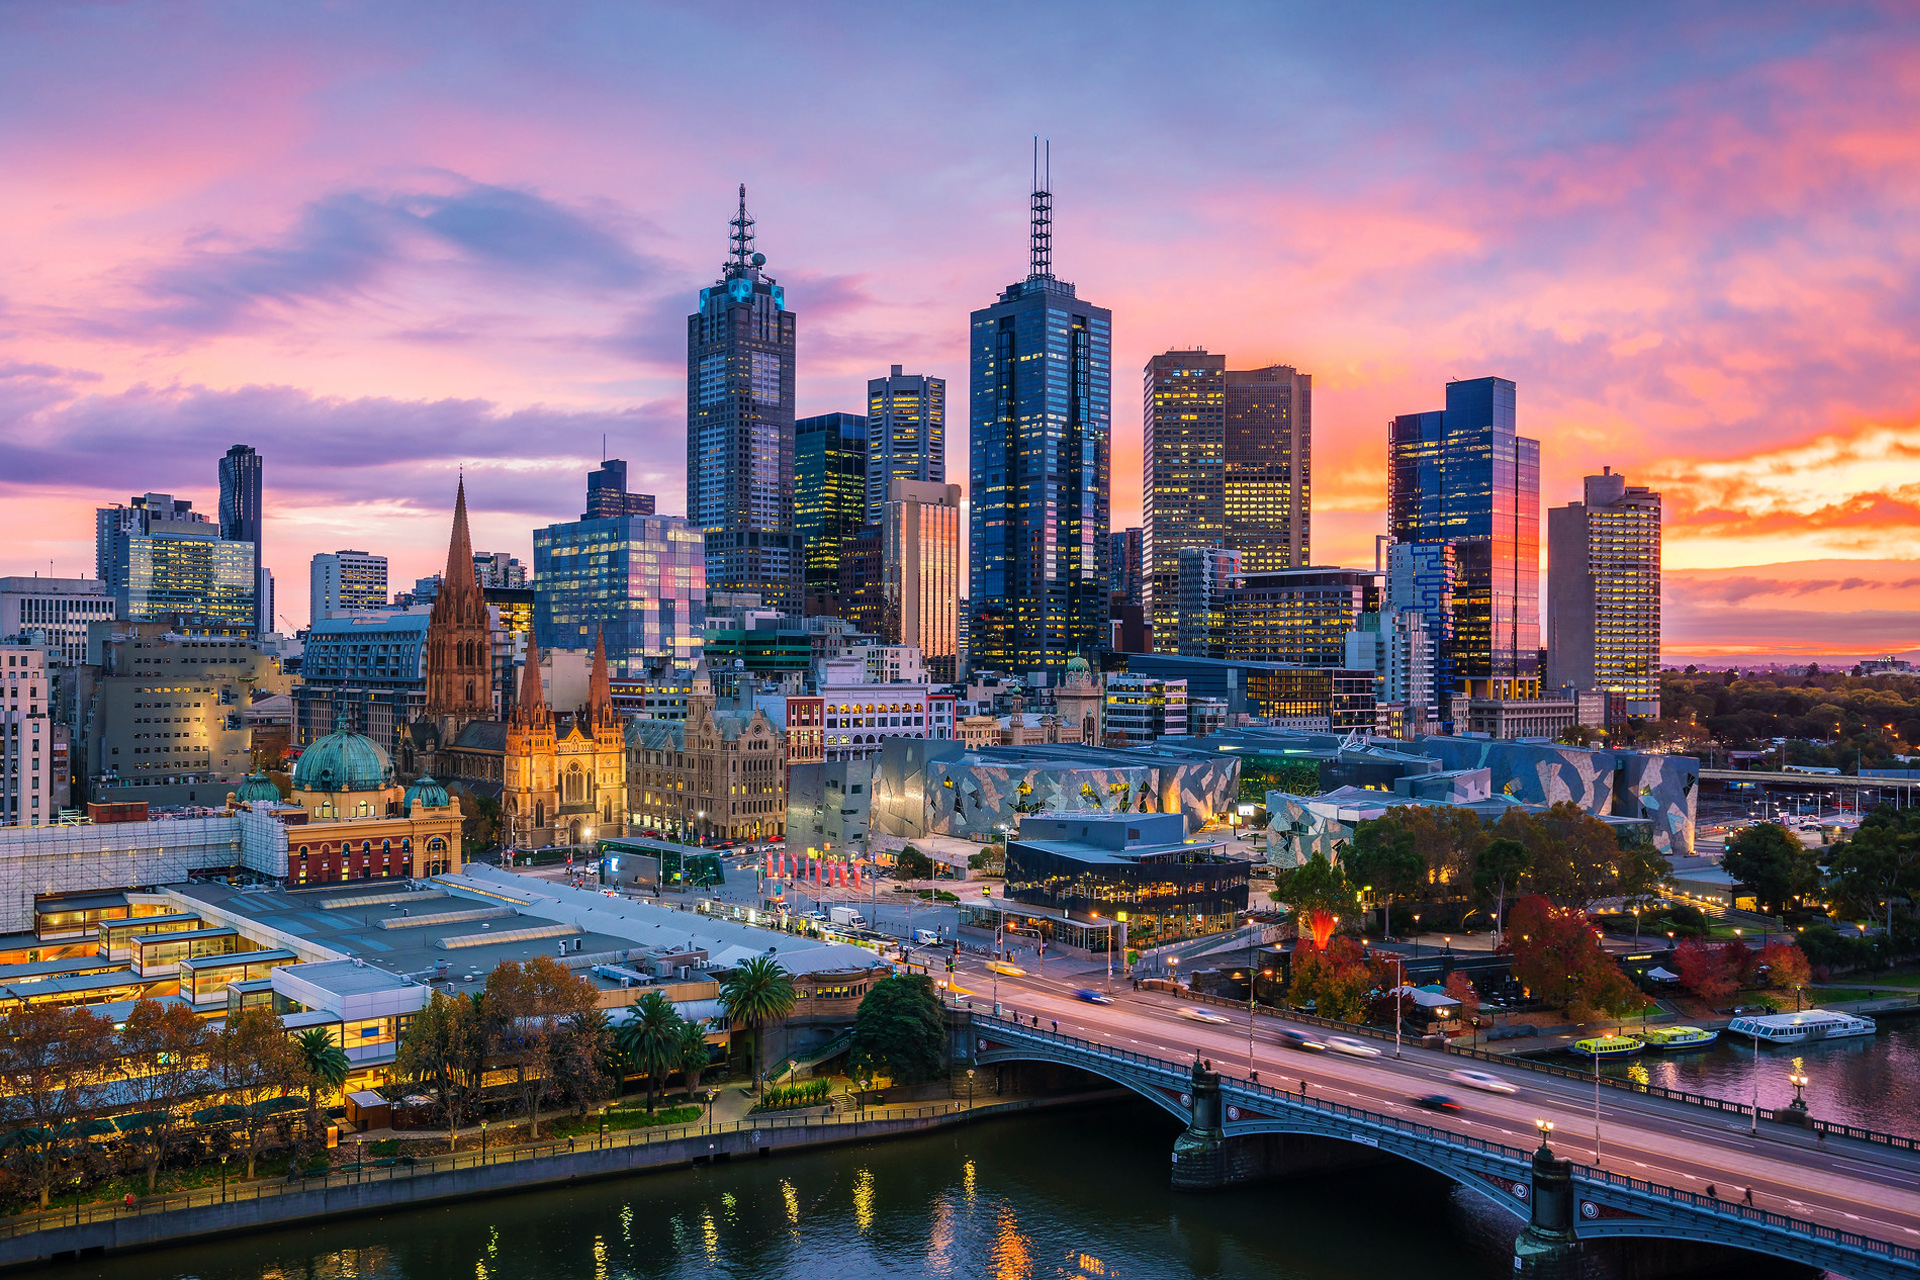  Melbourne  The Cultural Capital of Australia  Travel 